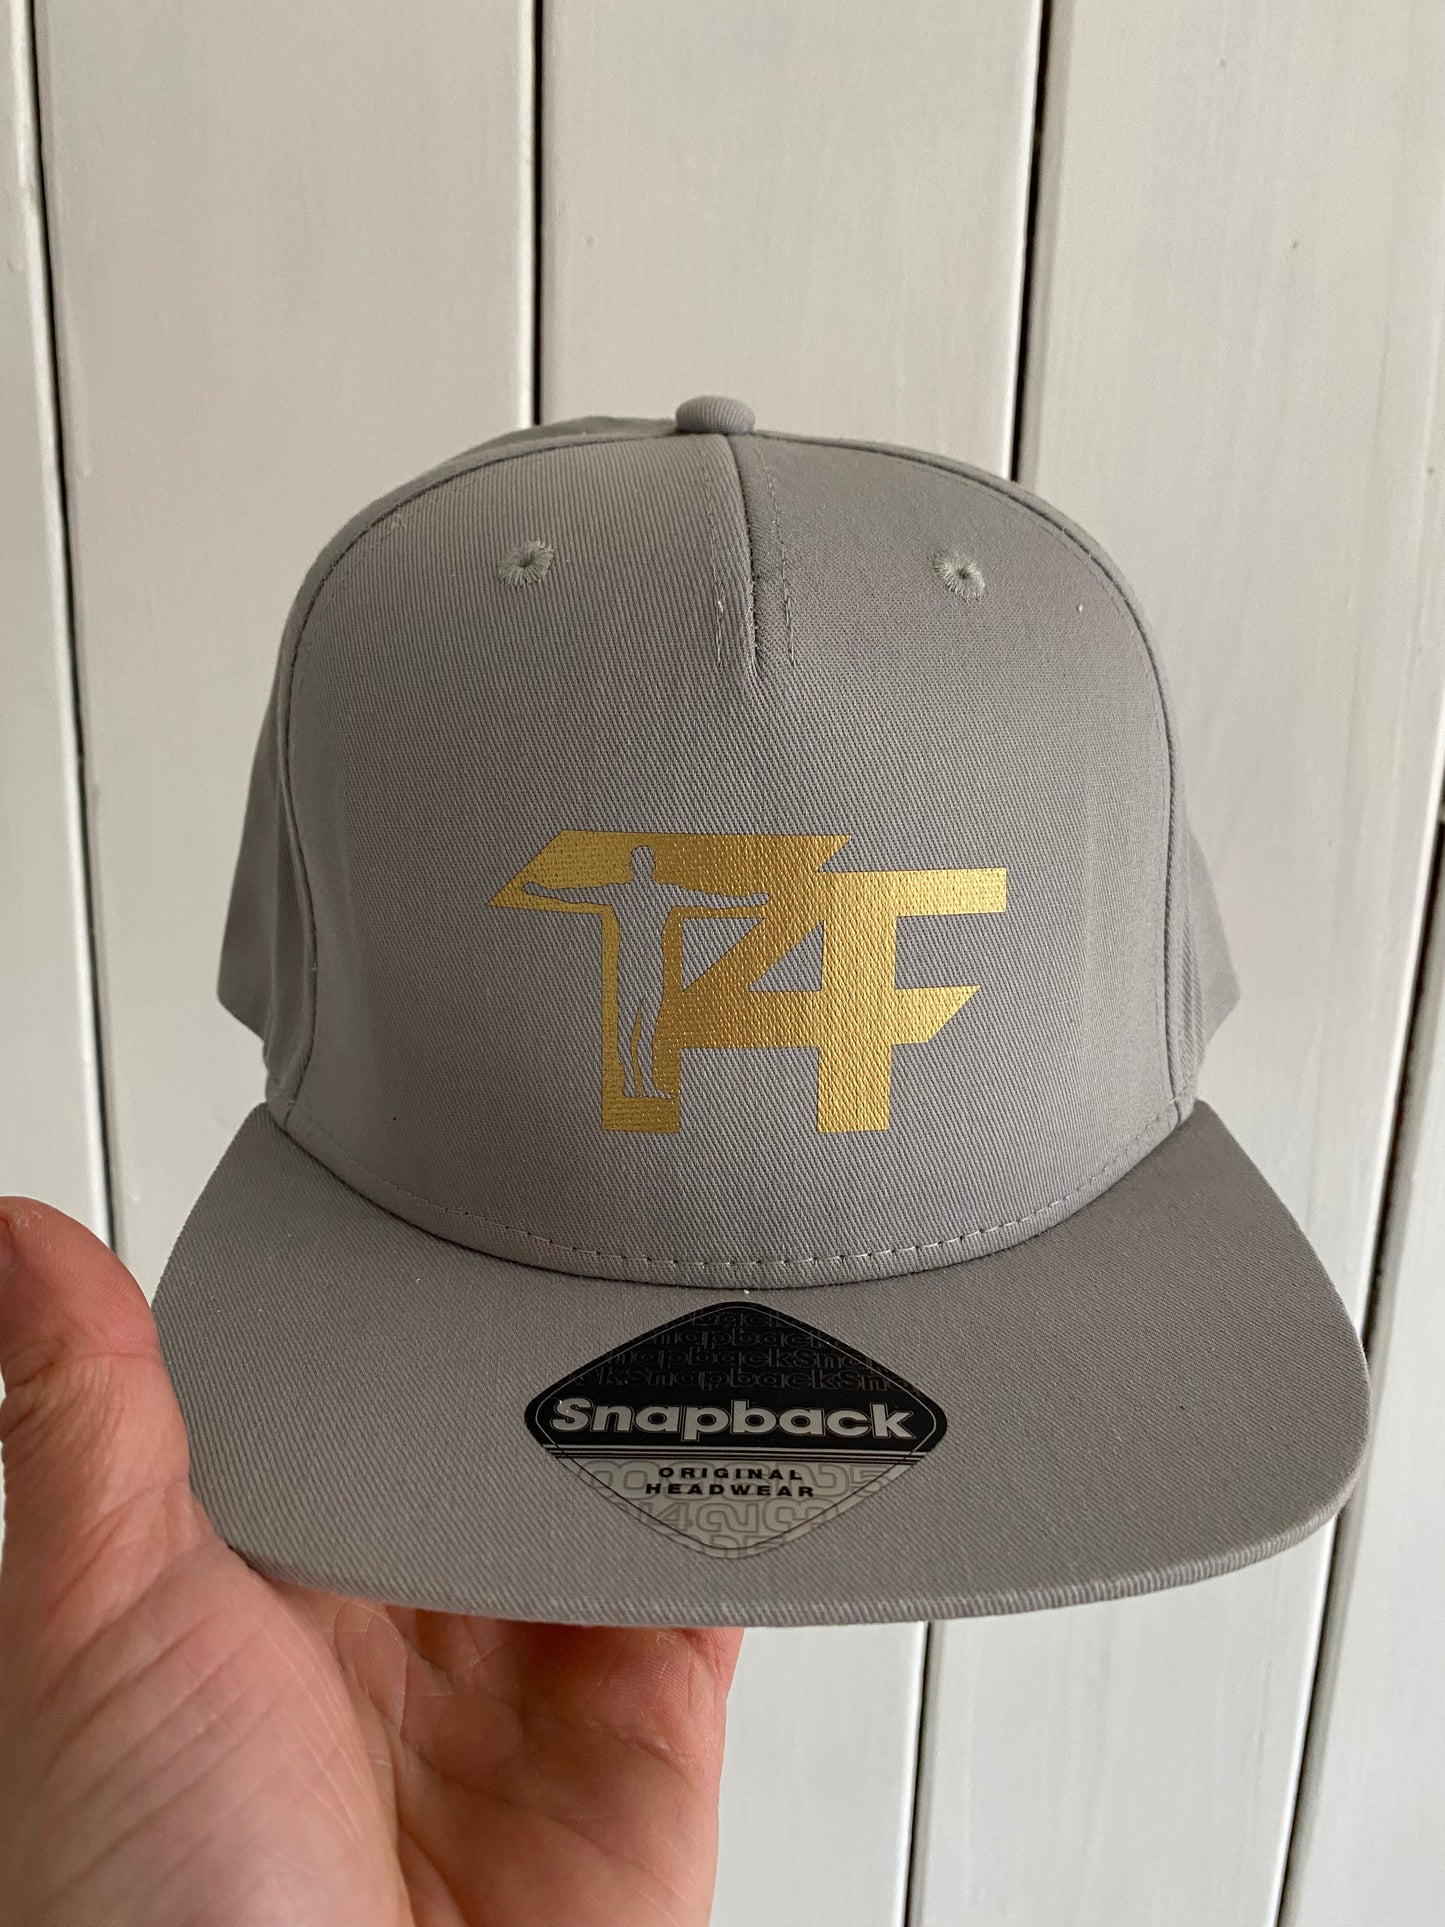 T4F snap back baseball cap